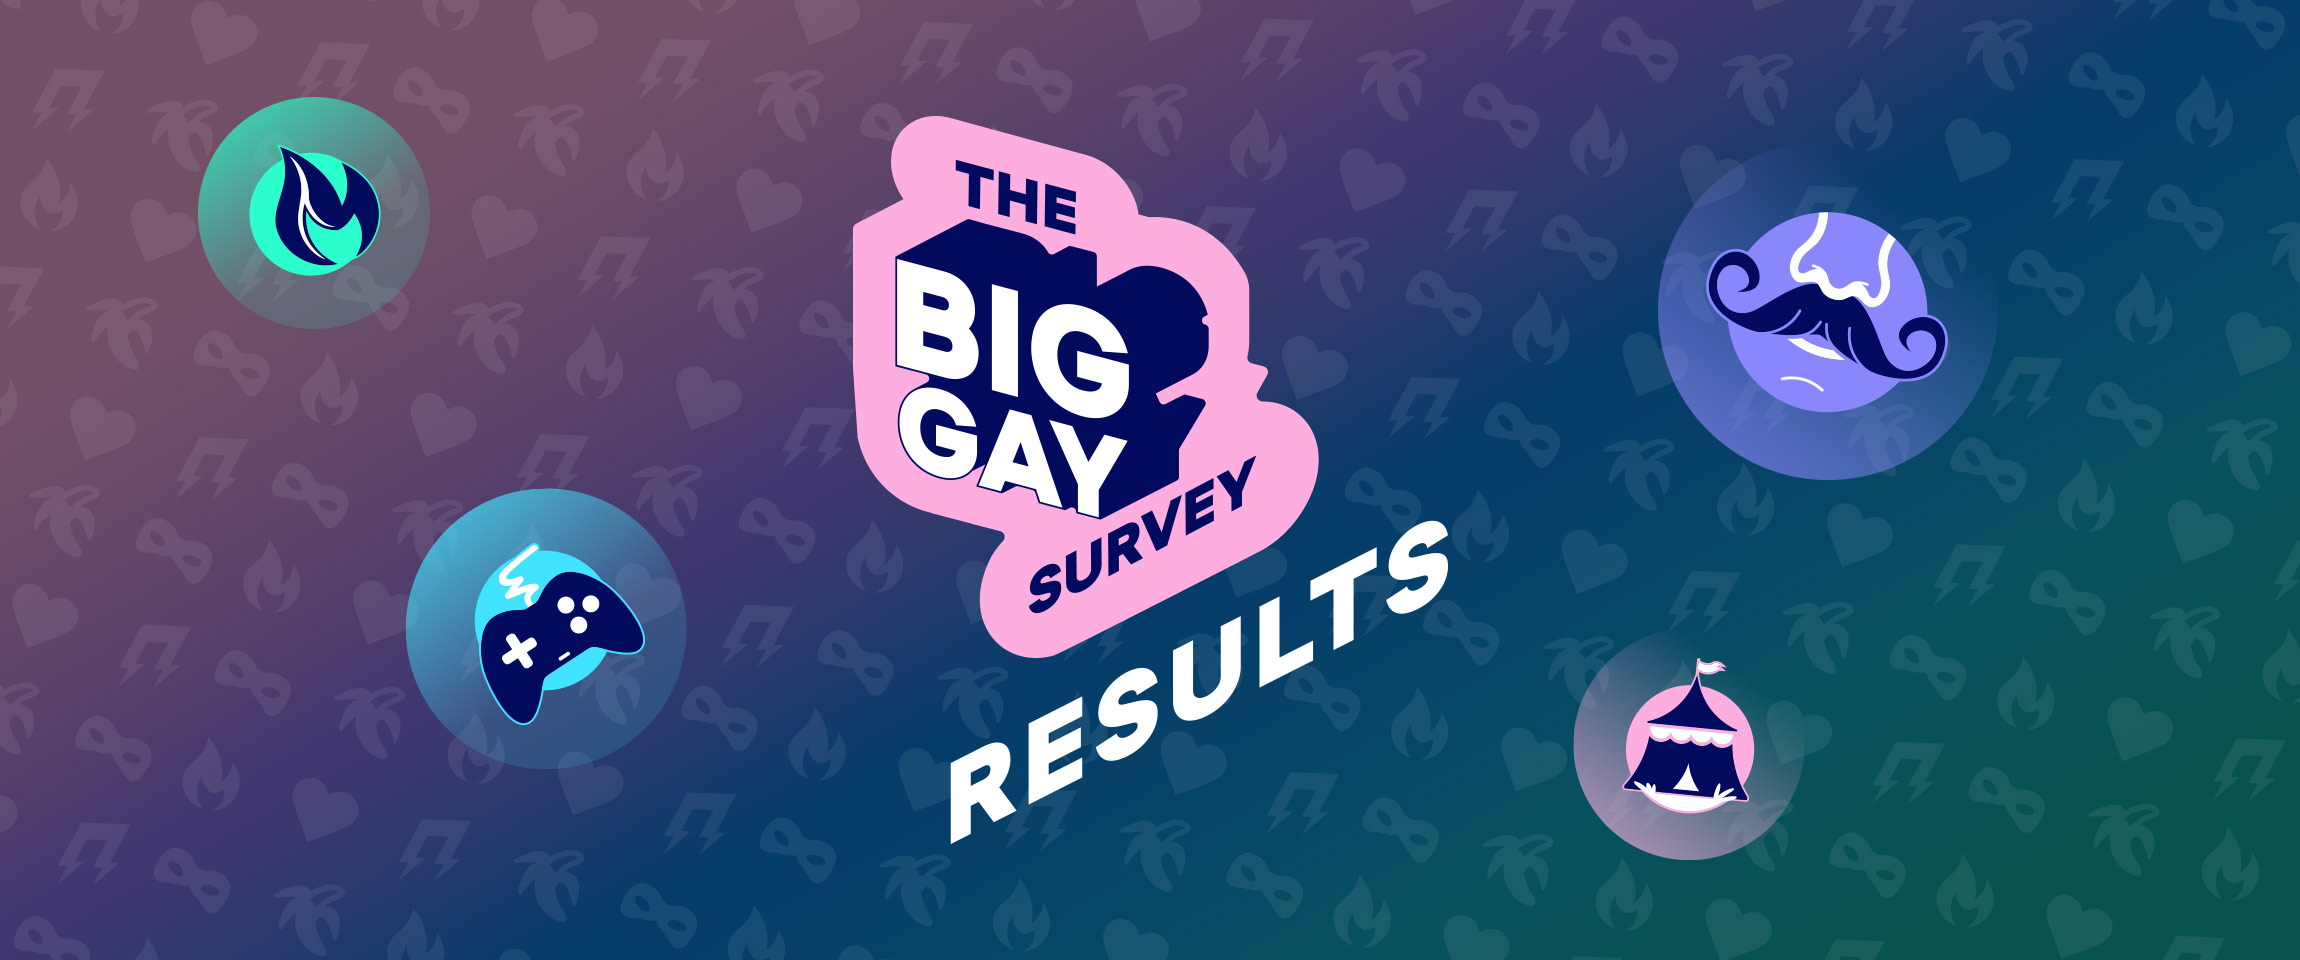 The Big Gay Survey Results